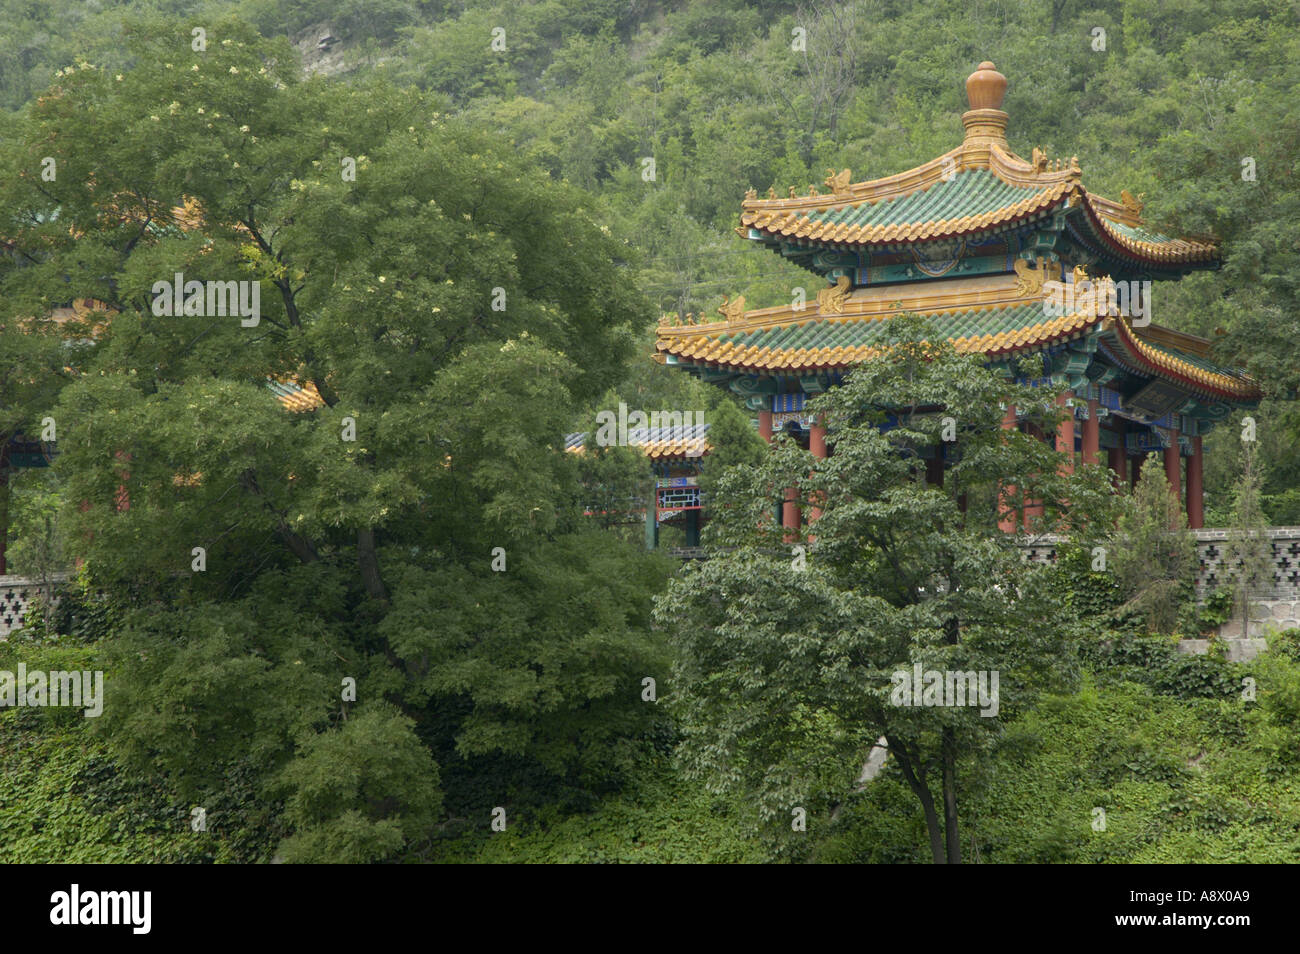 China Beijing A Pavilion On The Great Wall At Juyongguan Gate Near Badaling Stock Photo